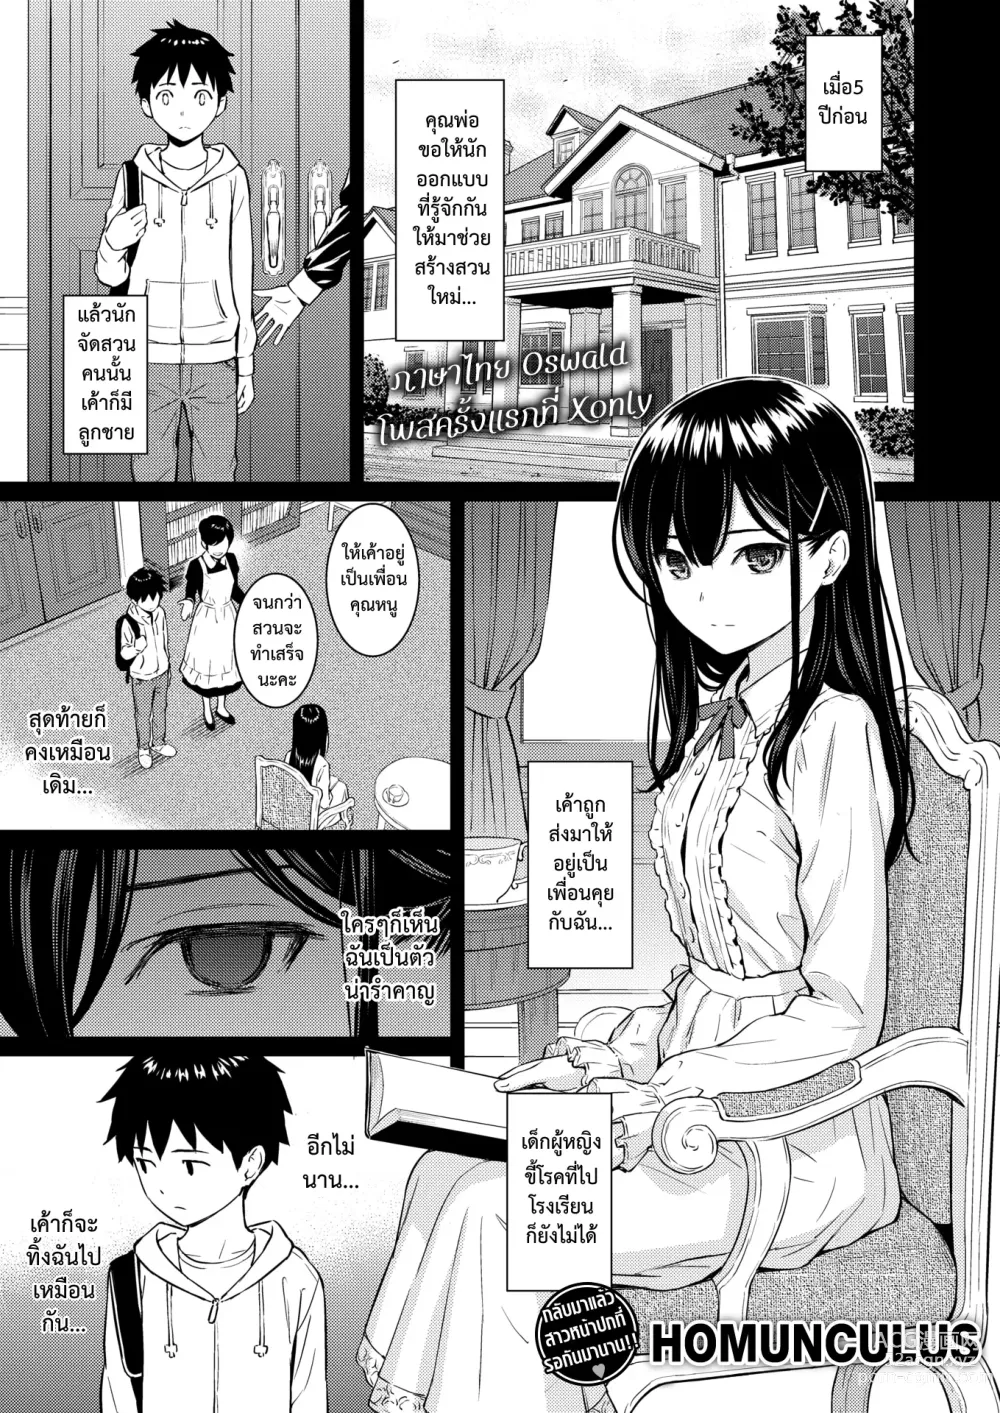 Page 3 of manga สวนซ่อนรัก